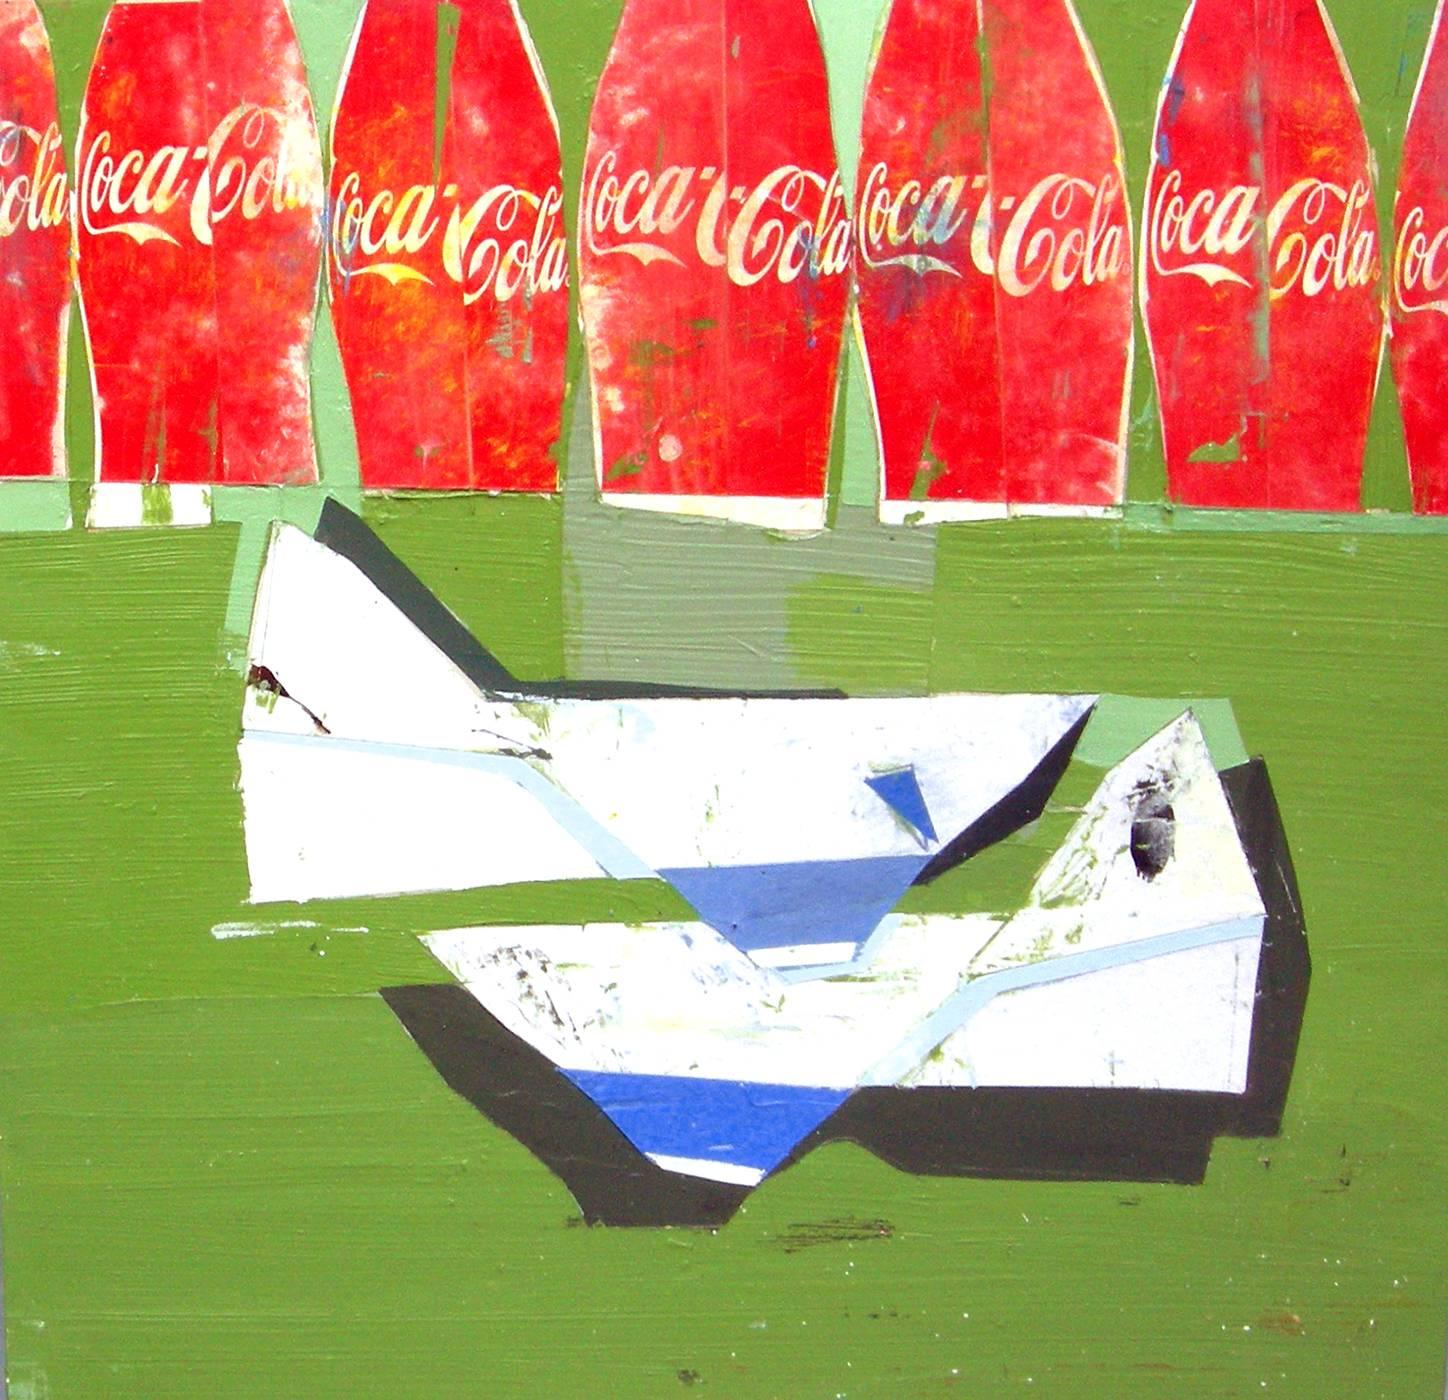 When We Were Children / Coke Work - Coca-Cola painting